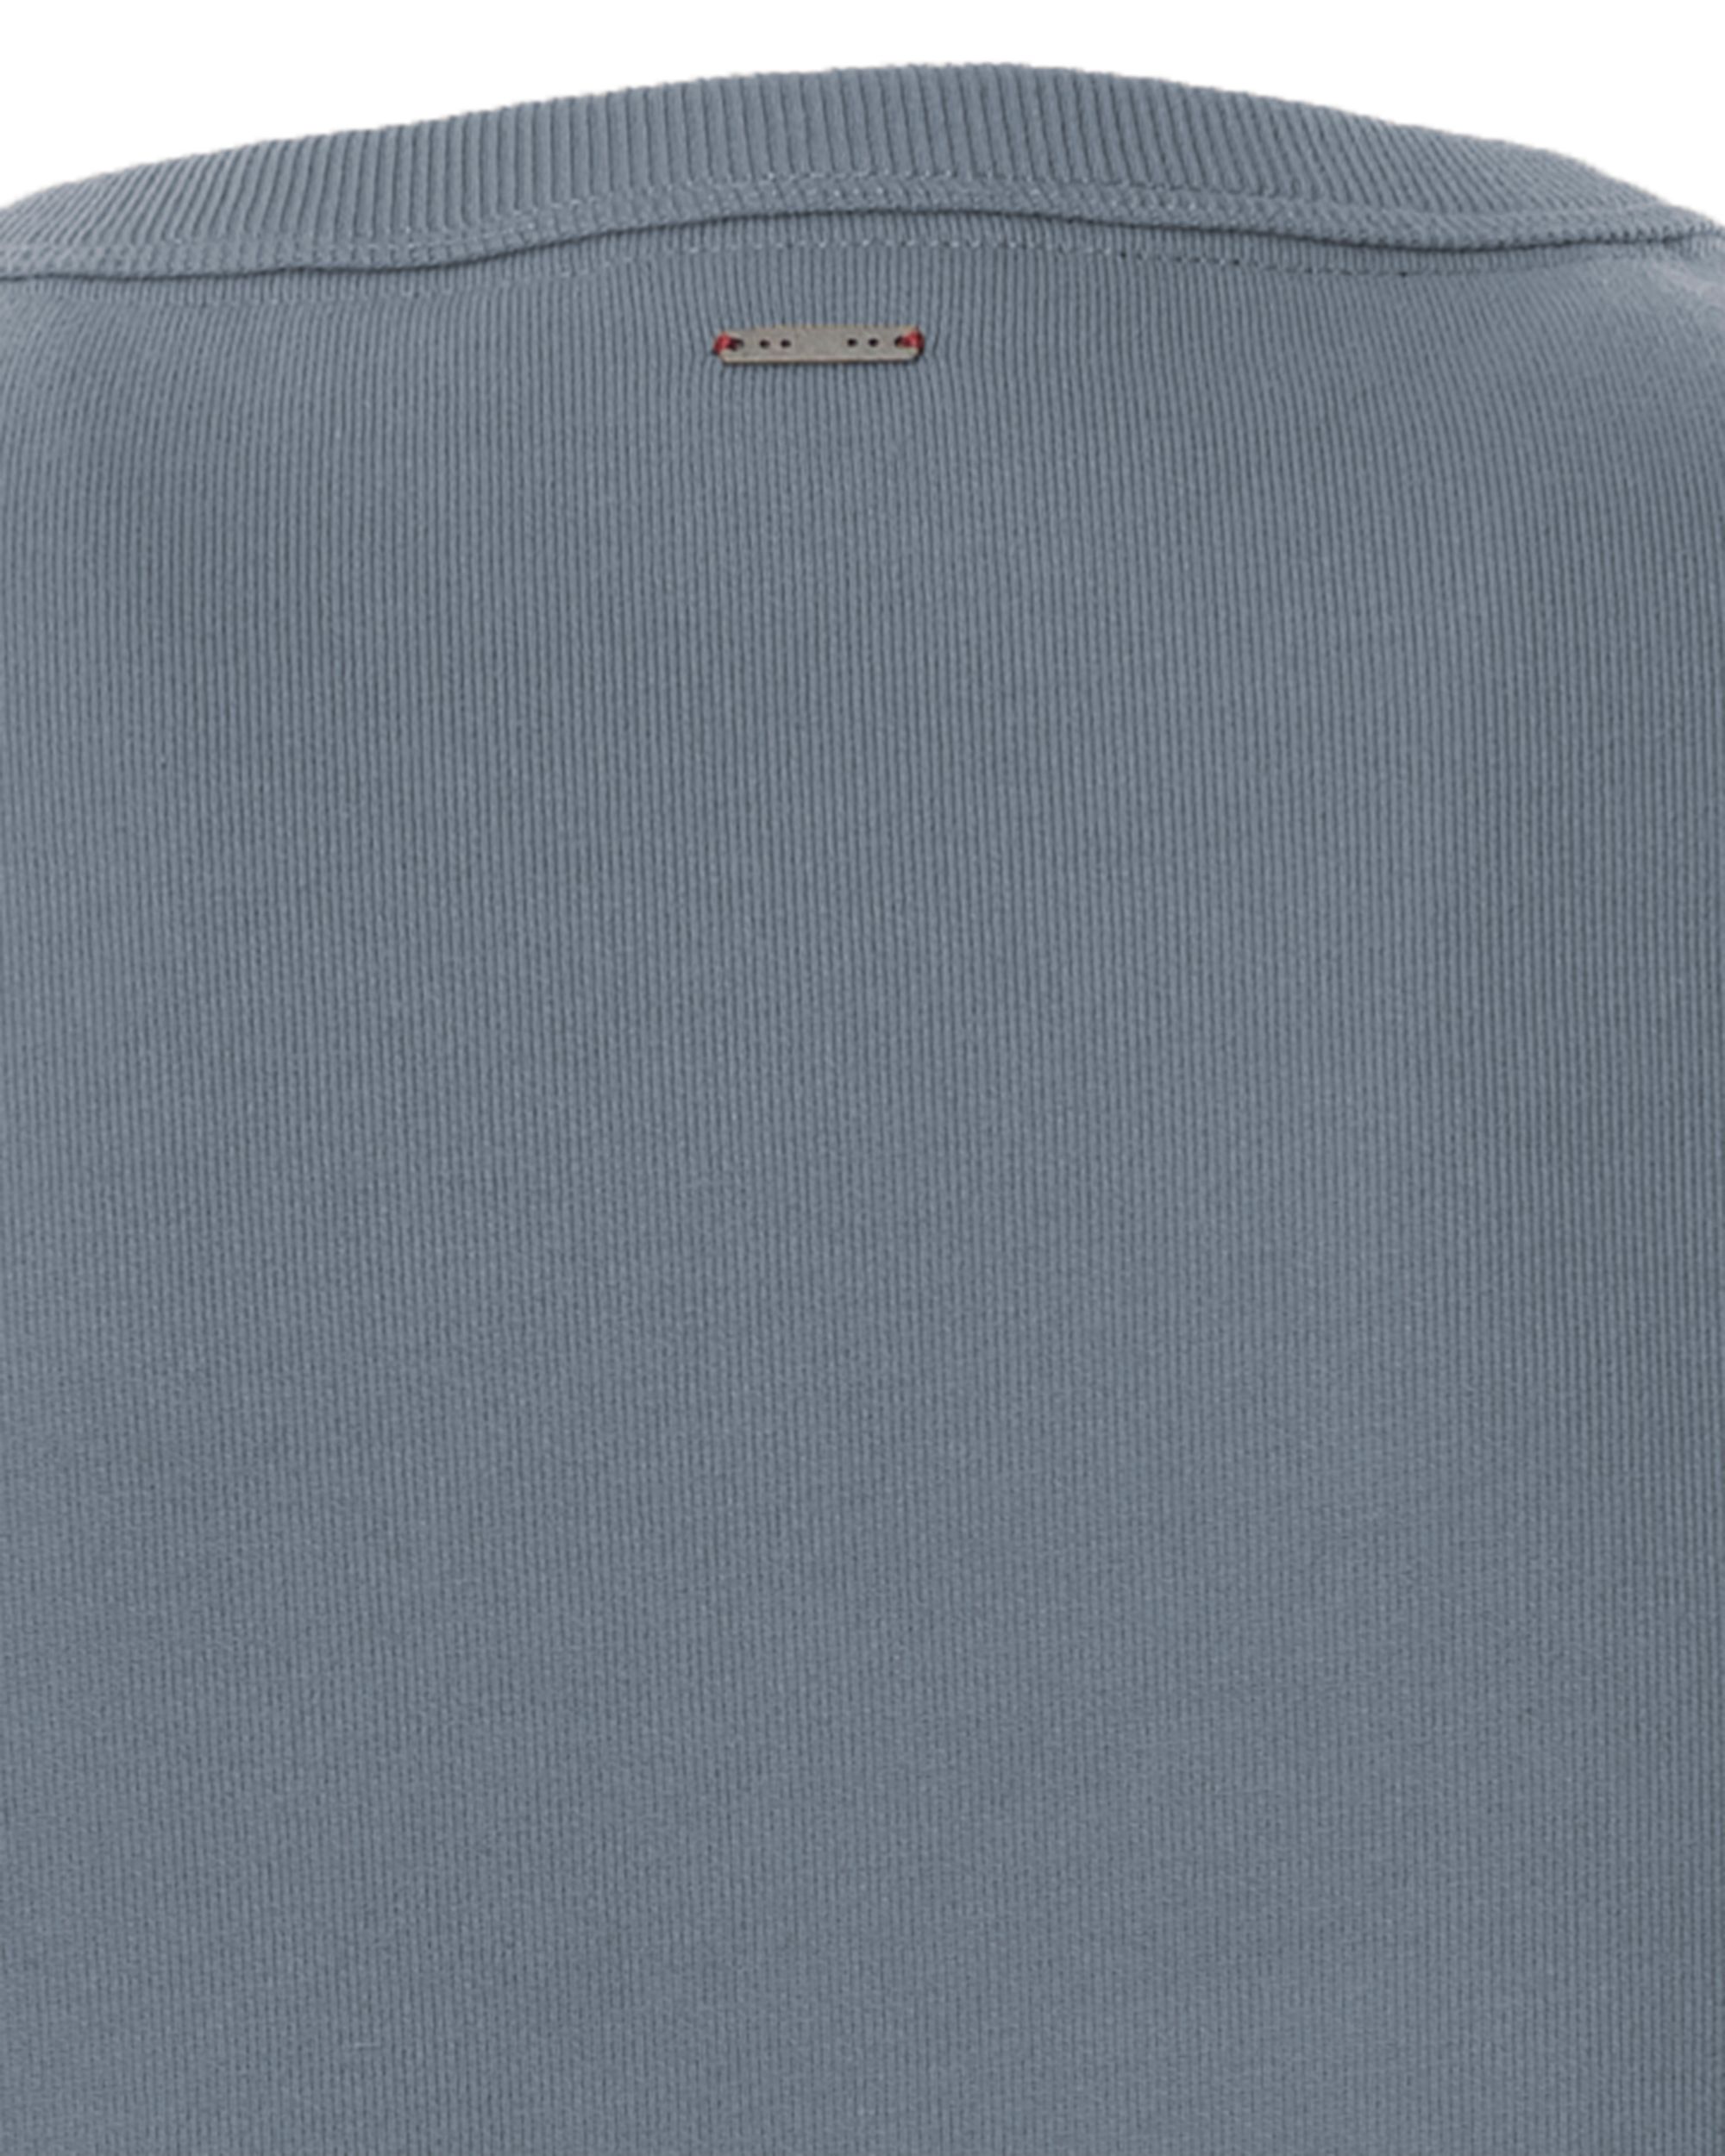 J.C. RAGS Jordan Sweater Middenblauw uni 073069-001-L